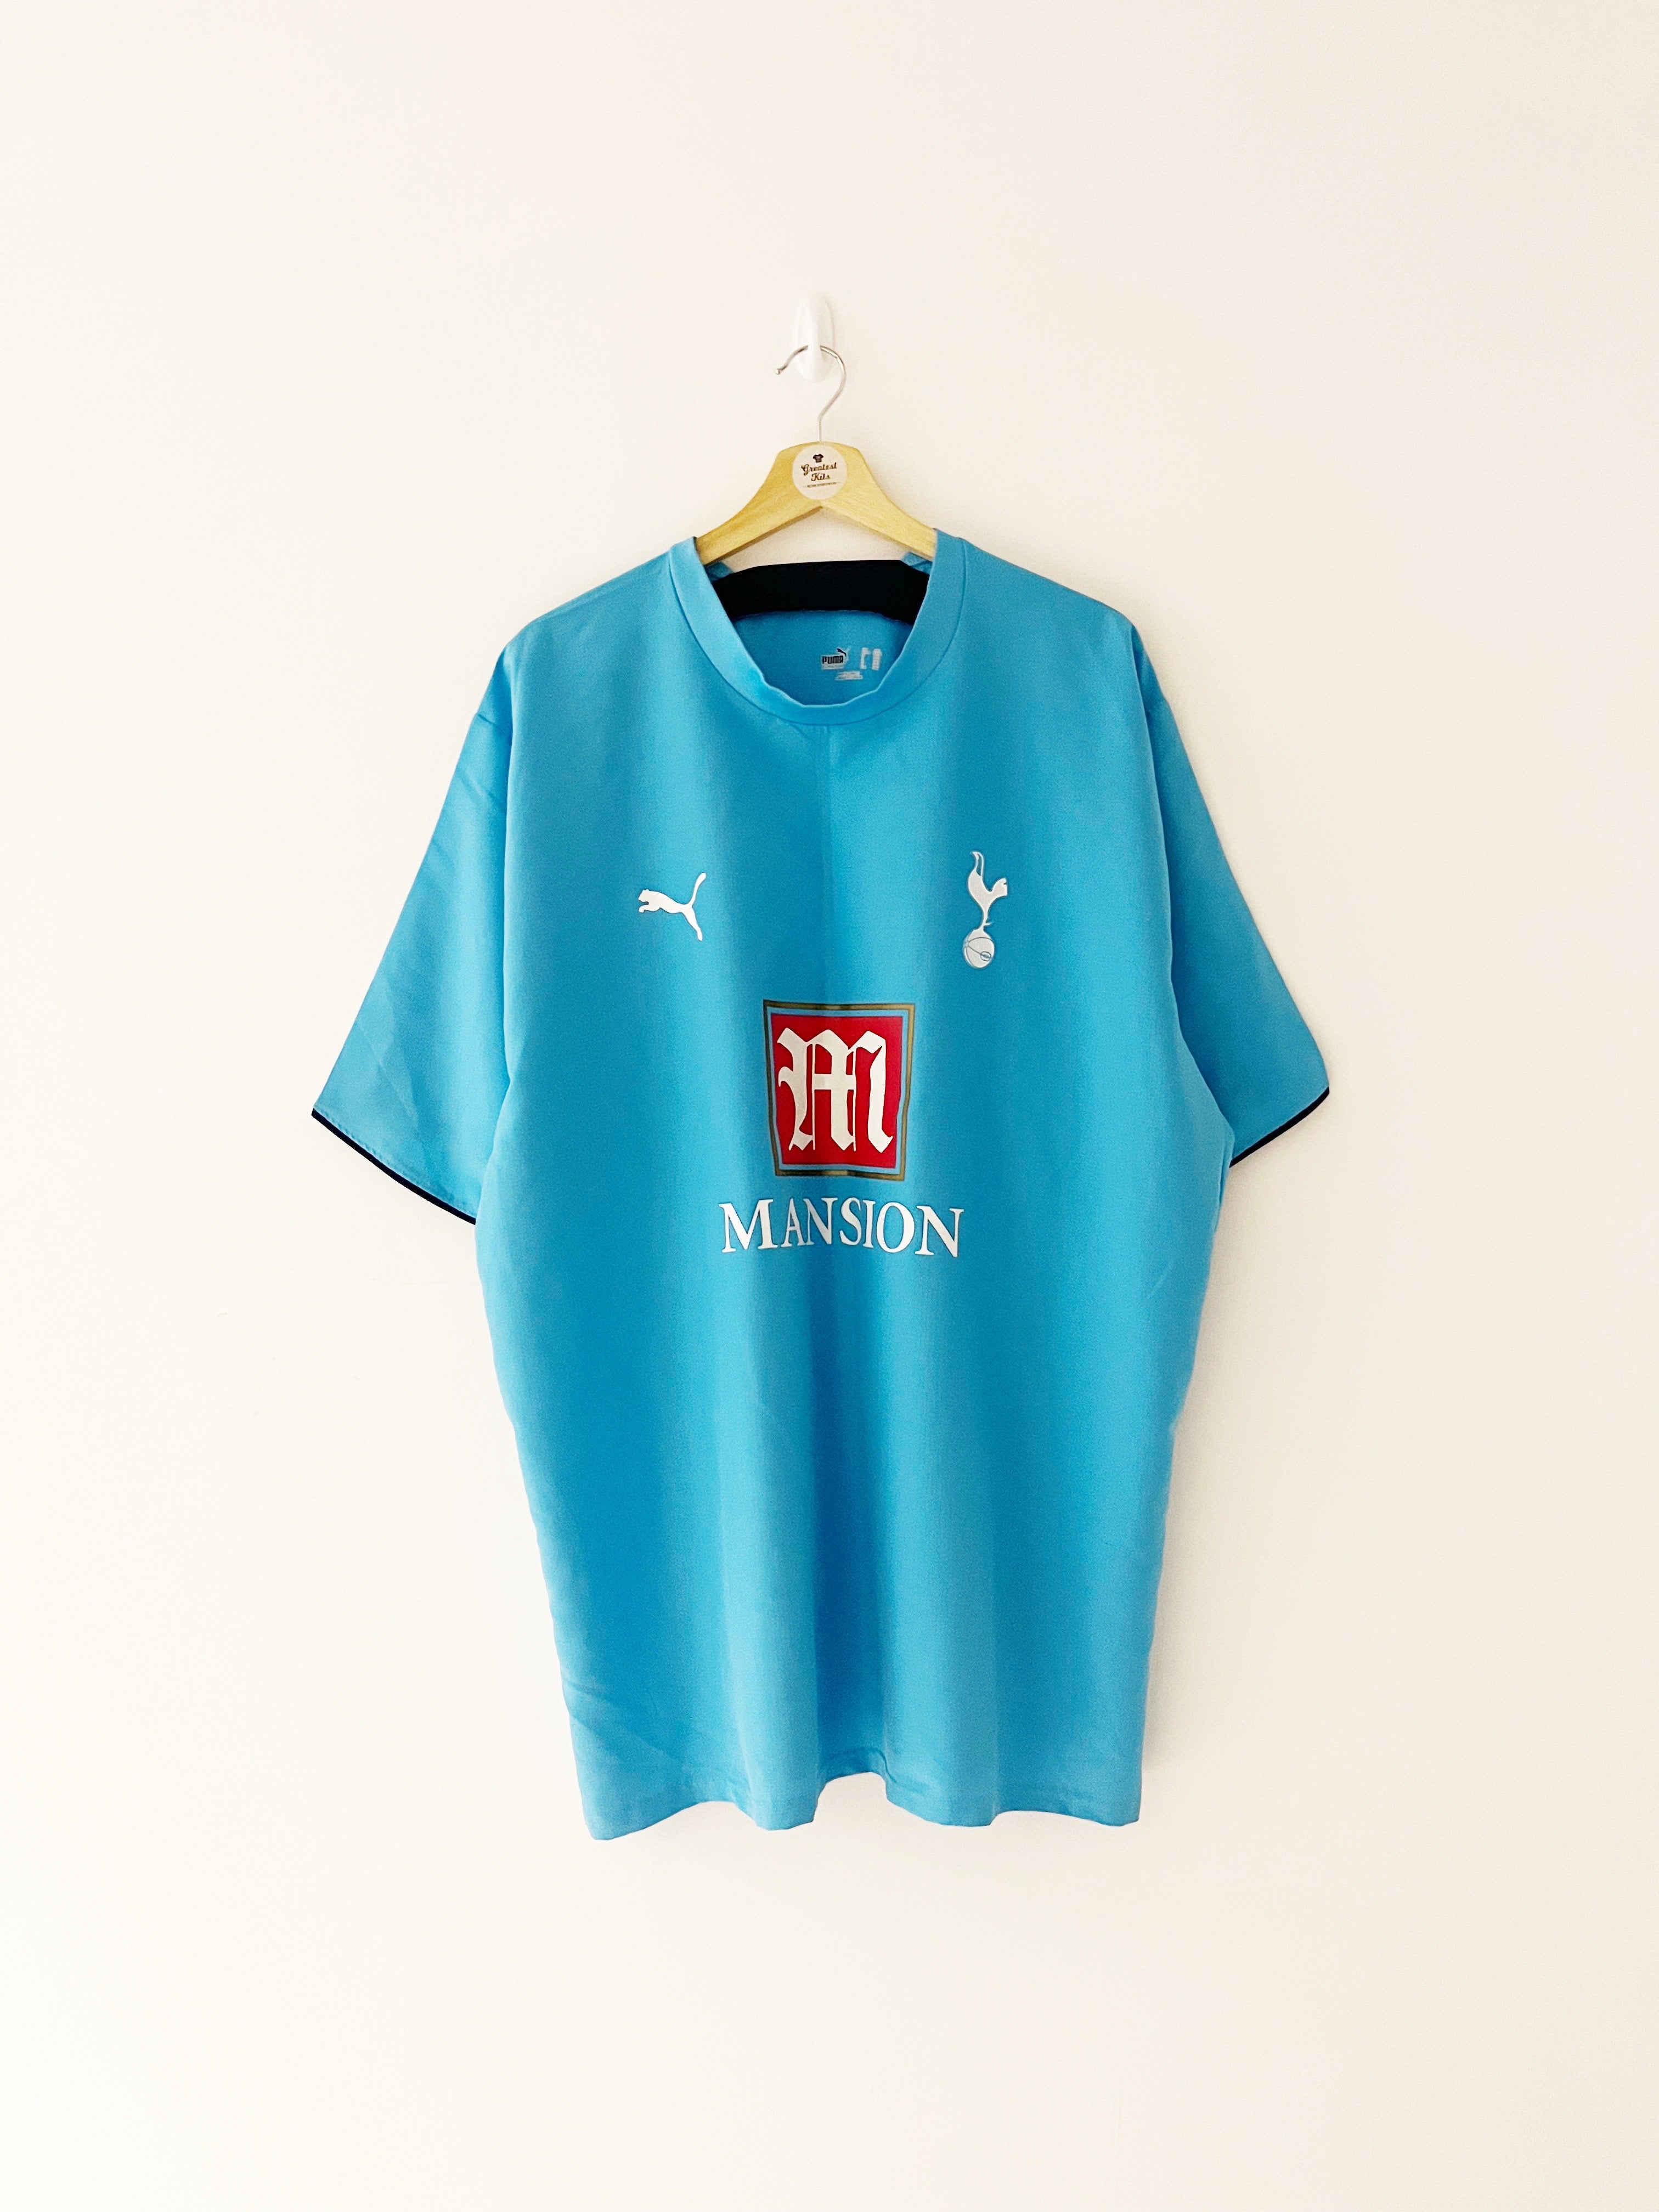 Tottenham Hotspur Third football shirt 2006 - 2007. Sponsored by Mansion